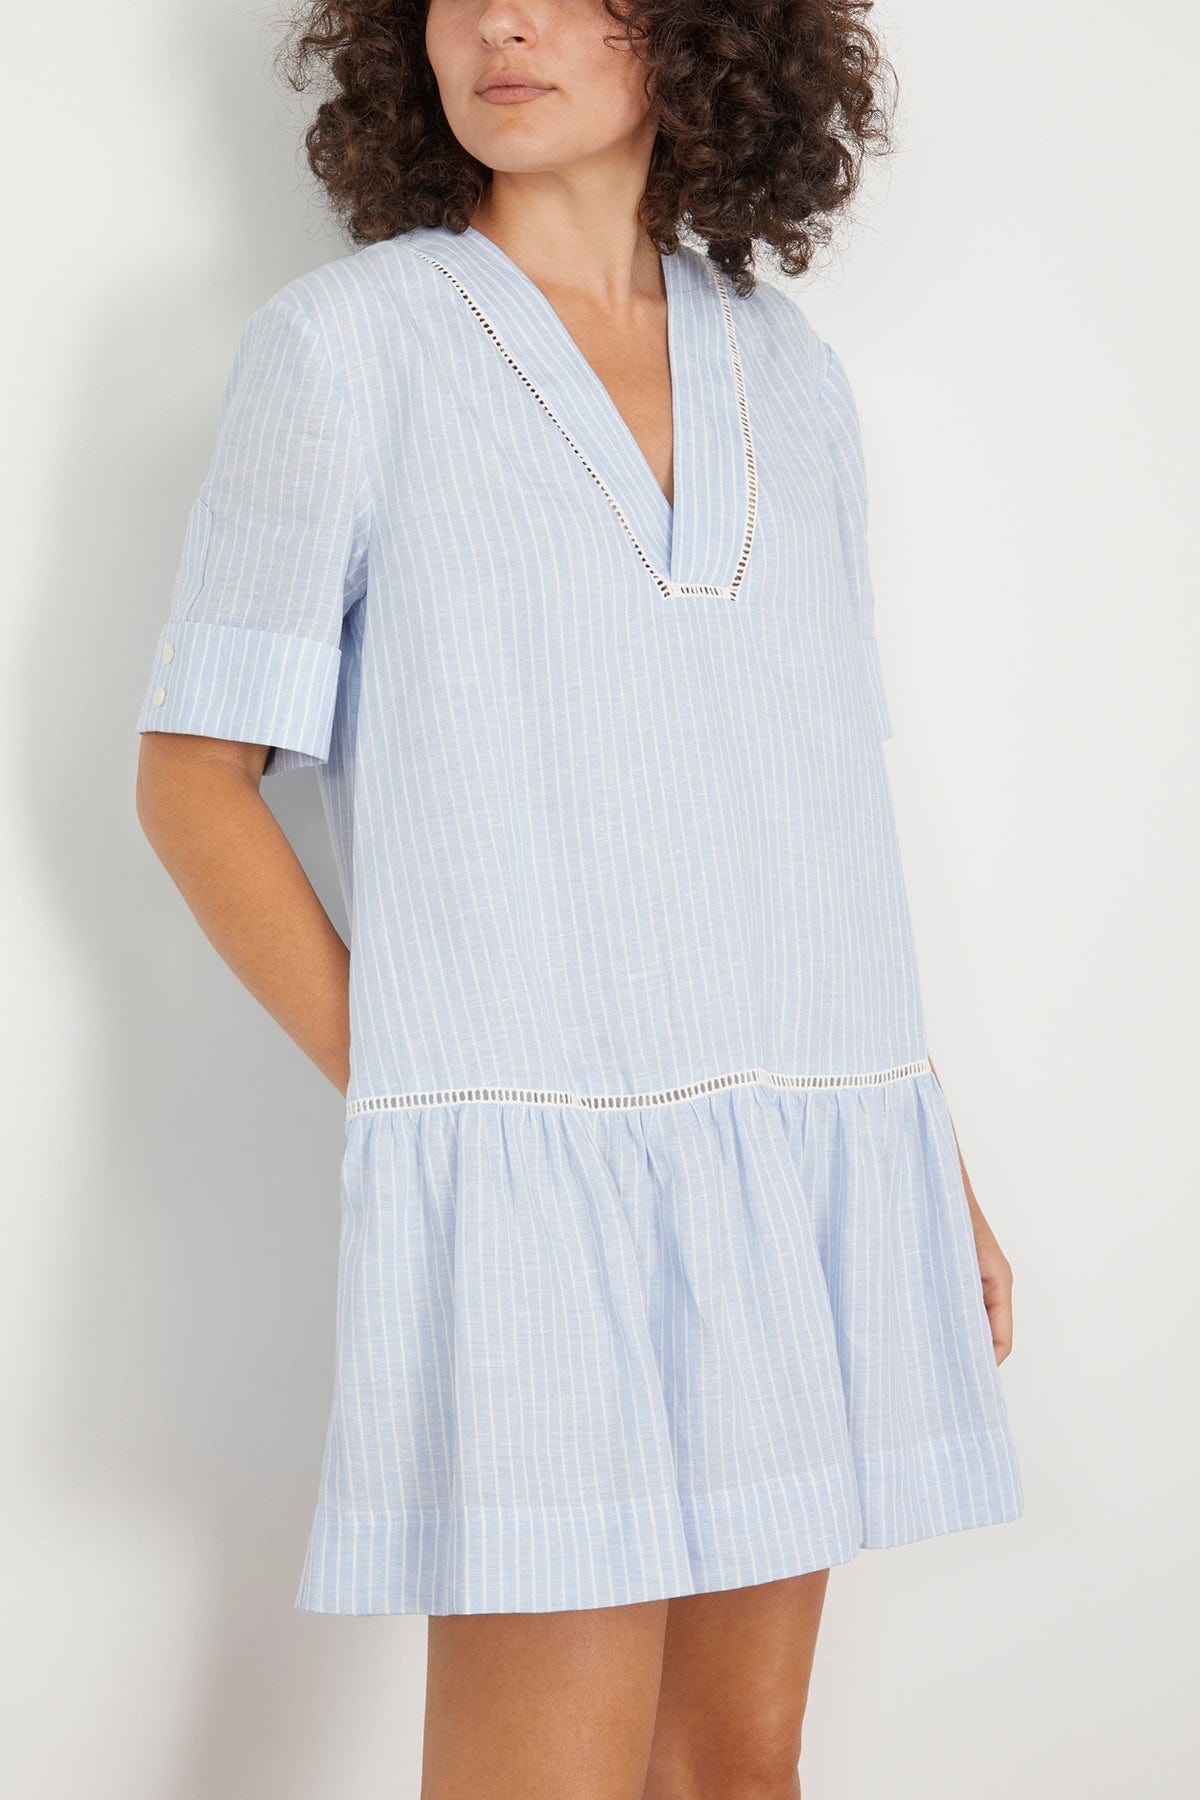 Jori Short Sleeve V-Neck Mini Dress in French Blue Stripe - 3